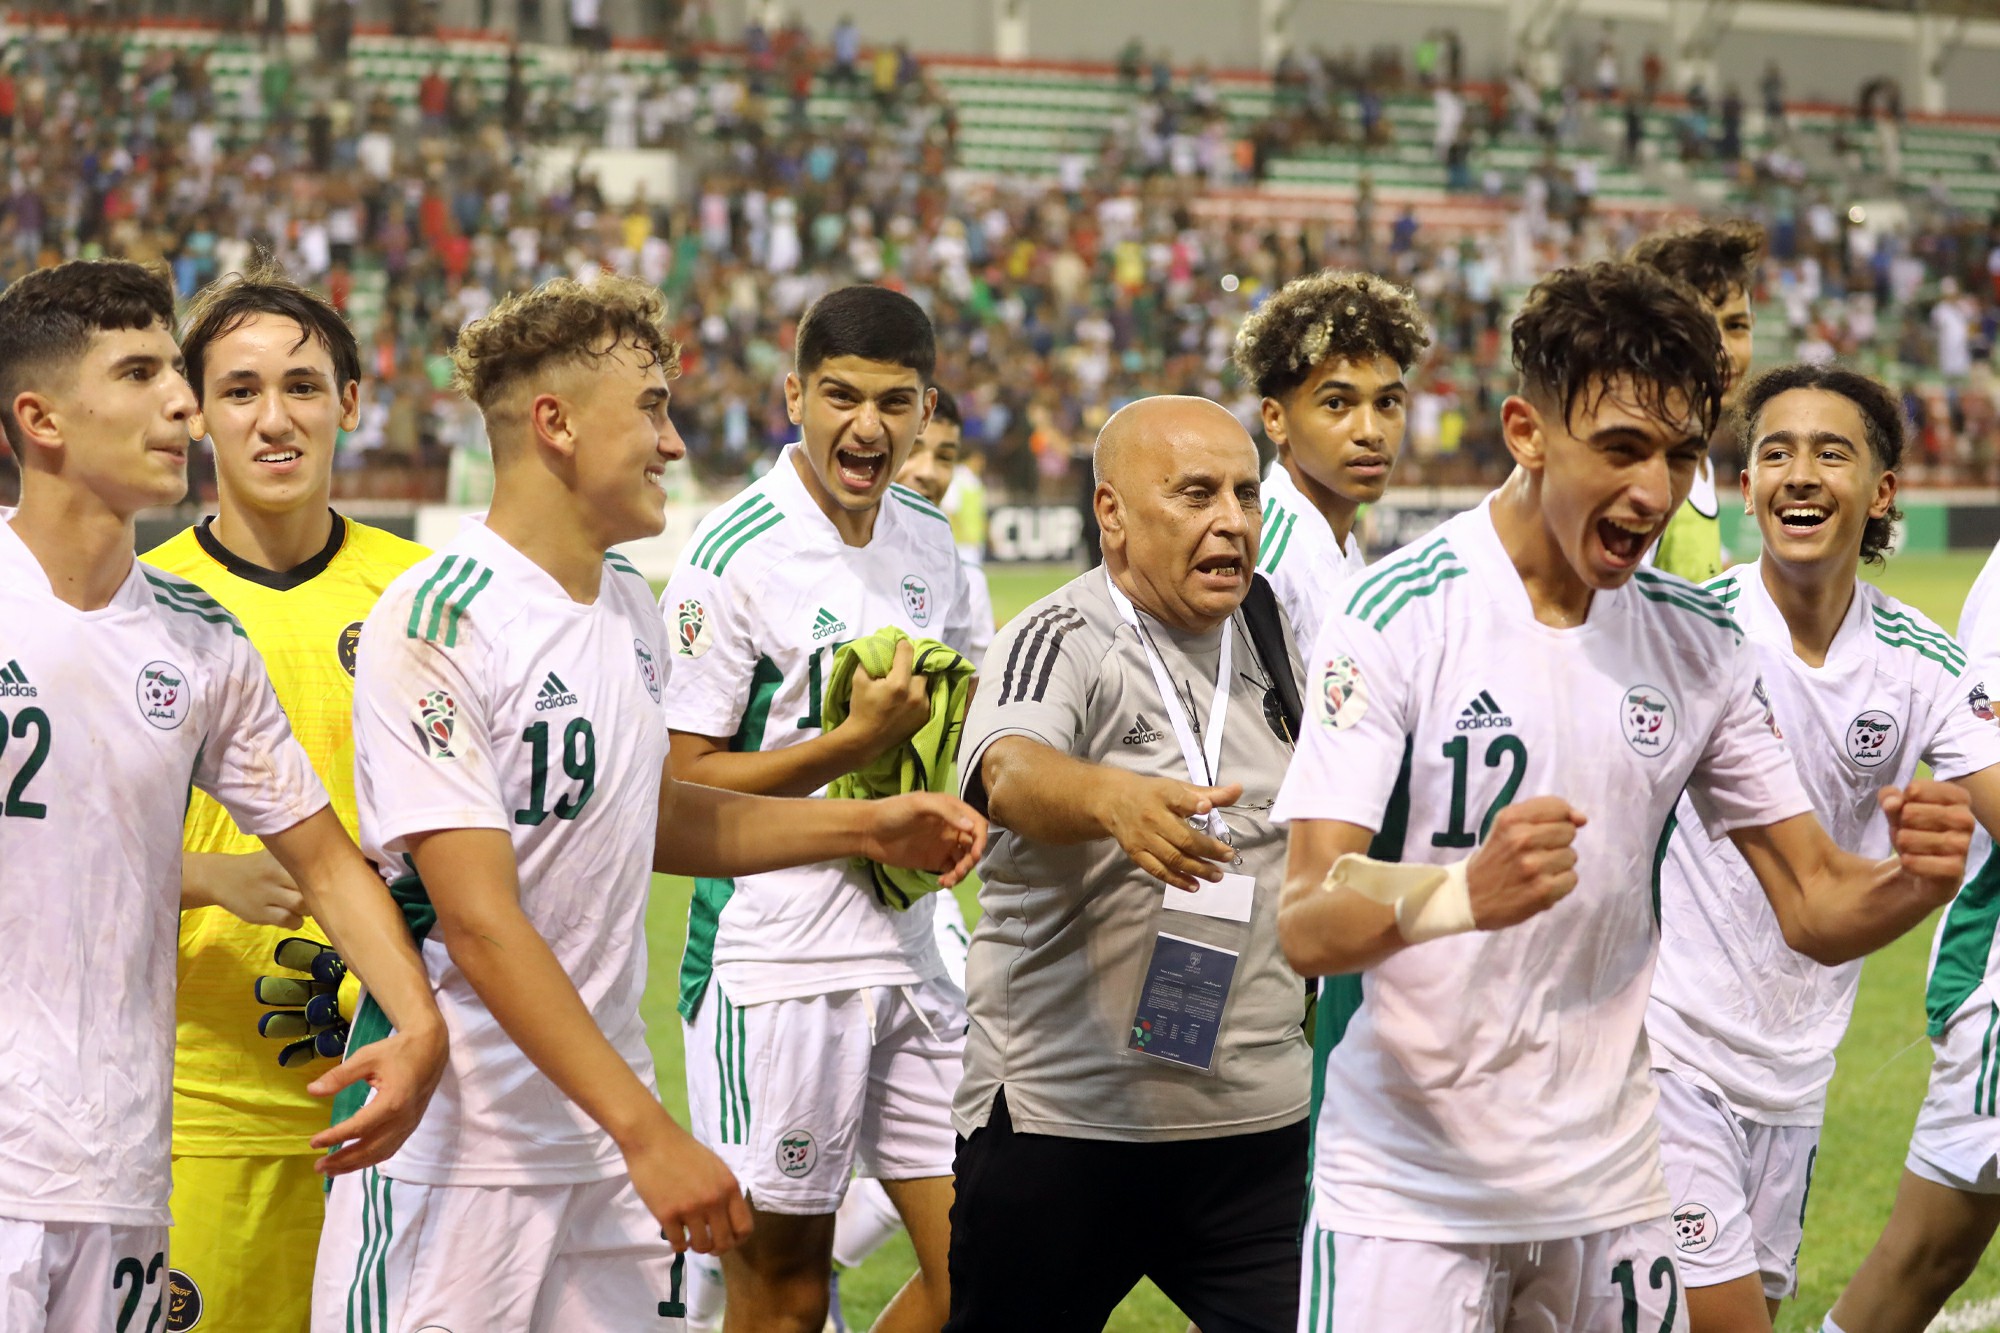 joie groupe cadet stade sig u17 arab cup